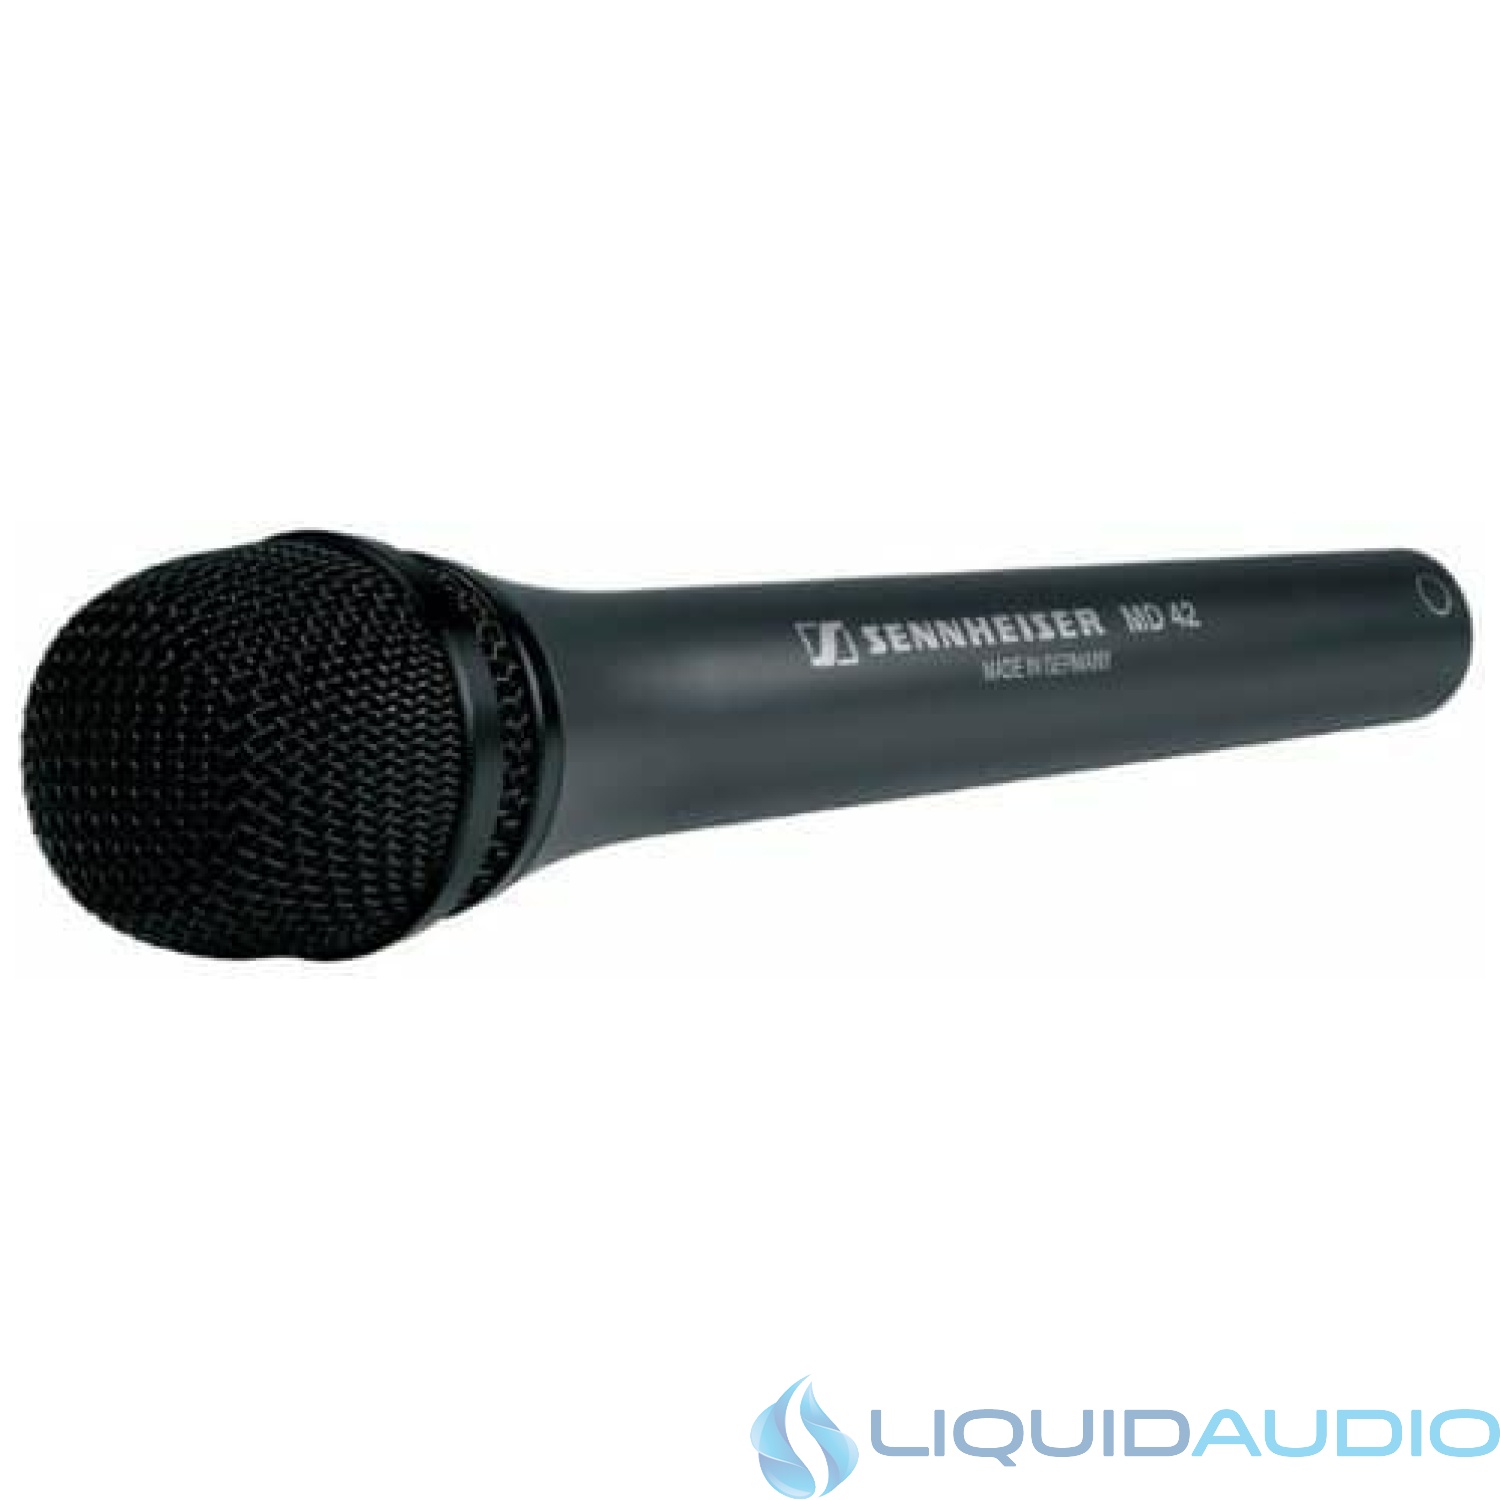 Sennheiser MD42 - Handheld Dynamic Omnidirectional Field ENG/EFP Microphone